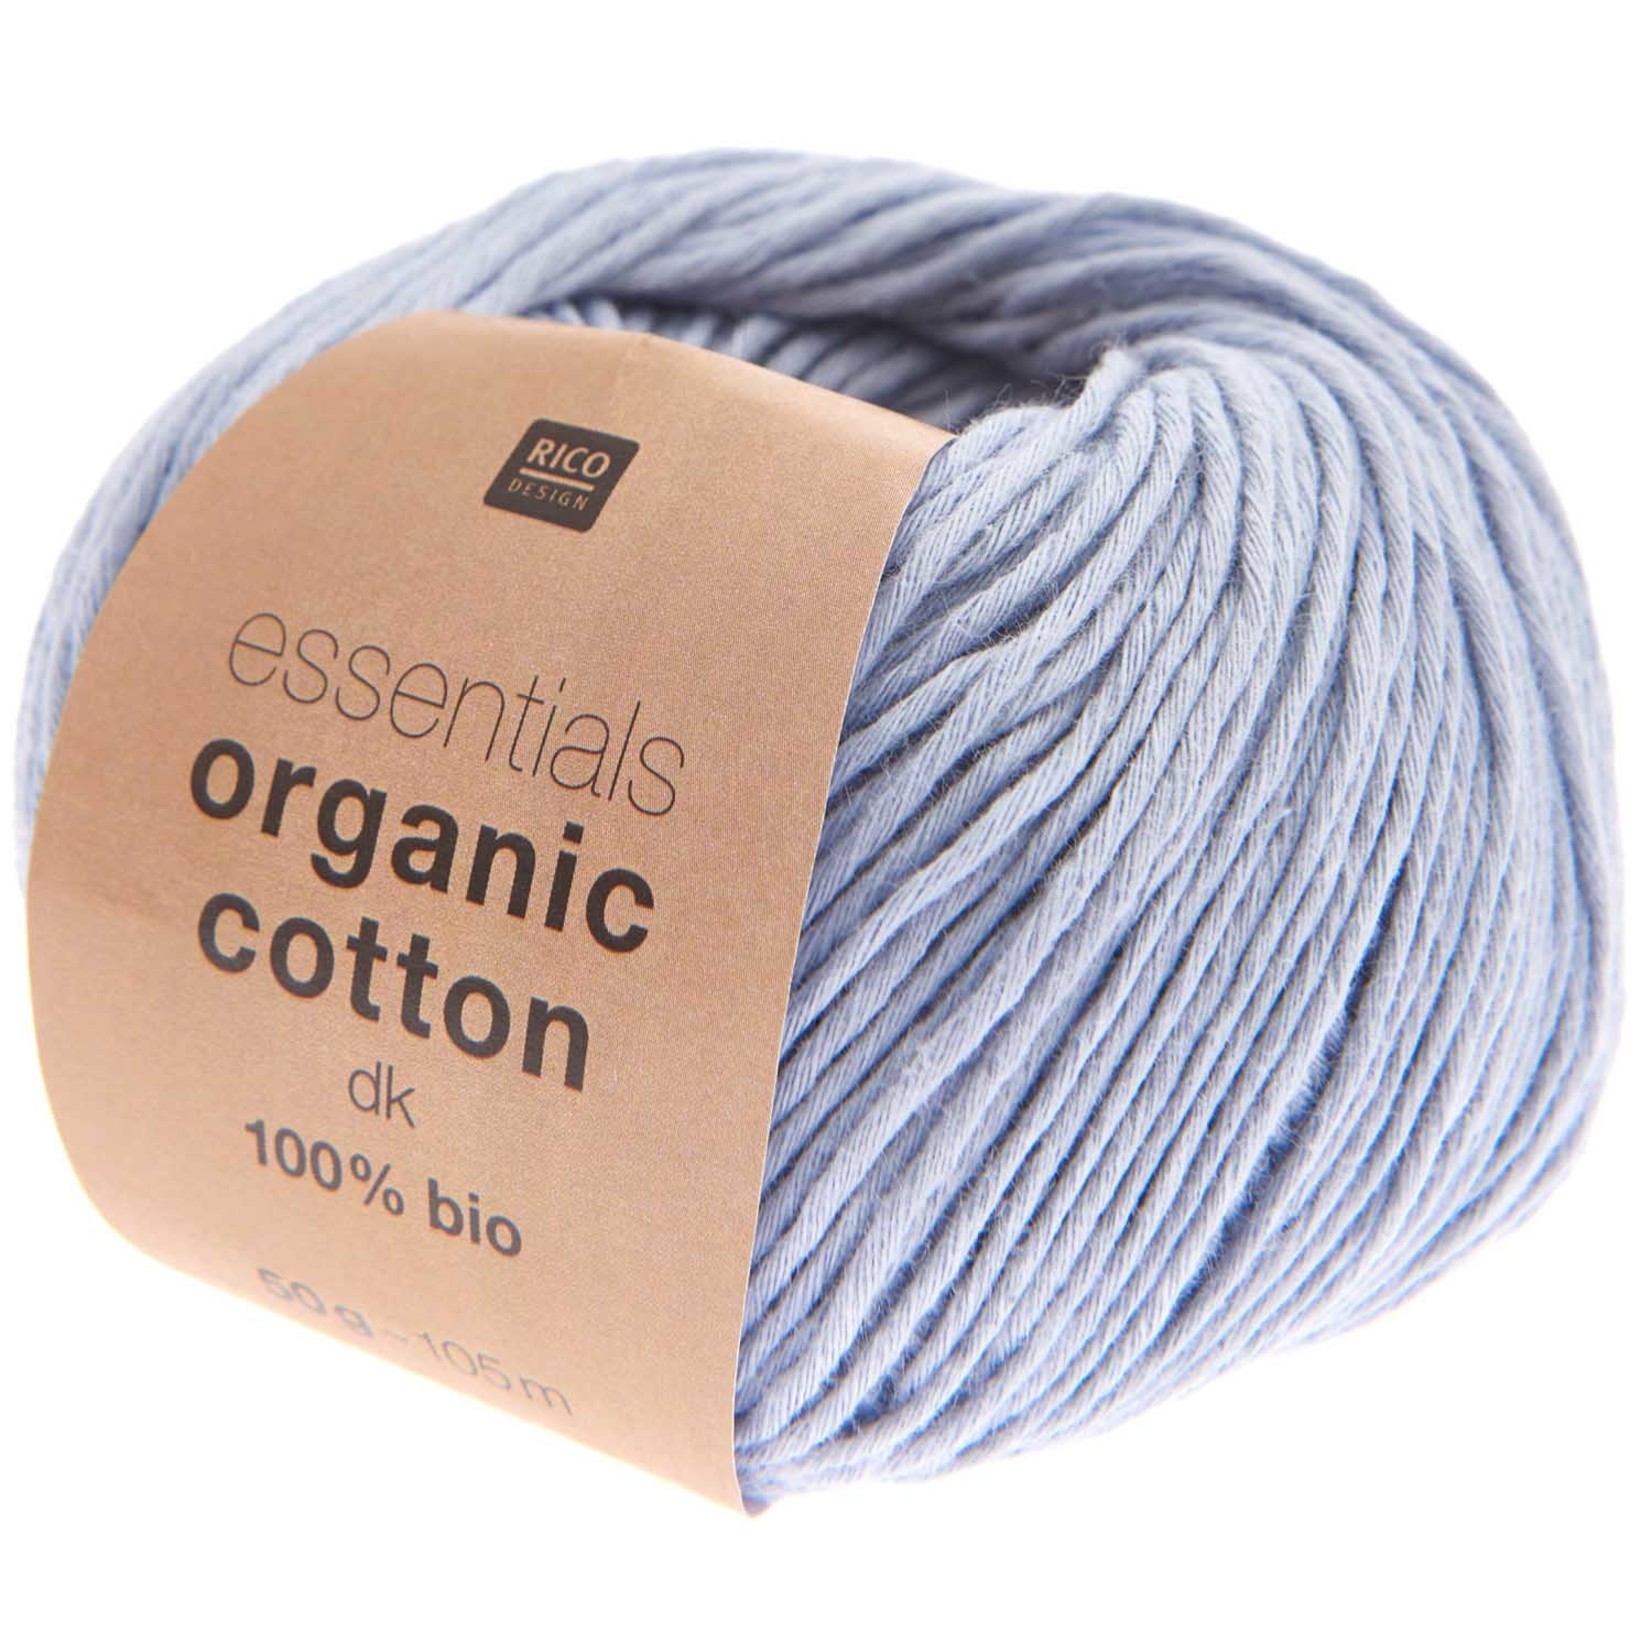 Rico Organic Cotton dk 15 Dove Blue